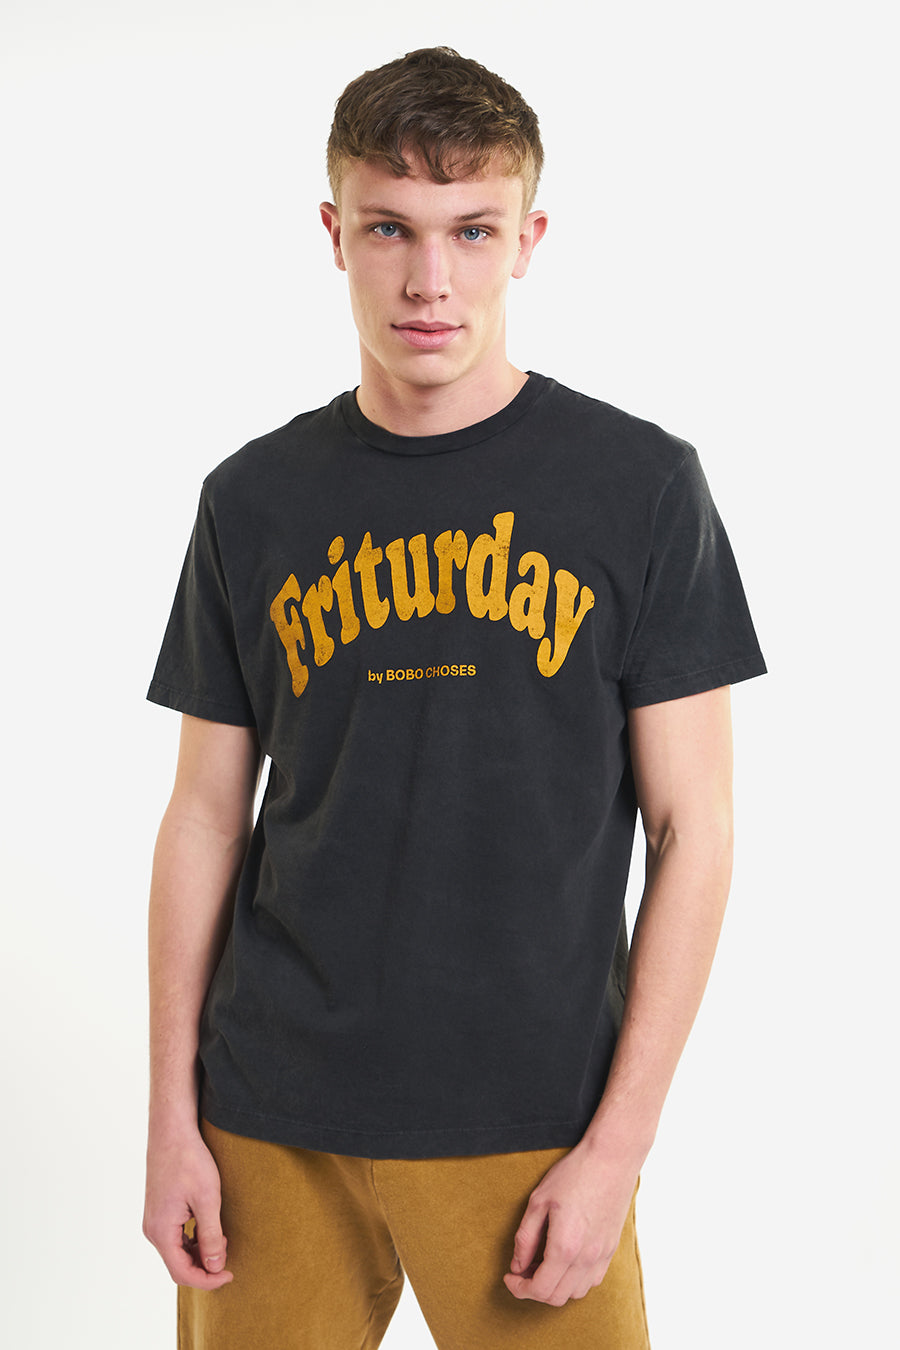 Friturday short sleeve T-shirt